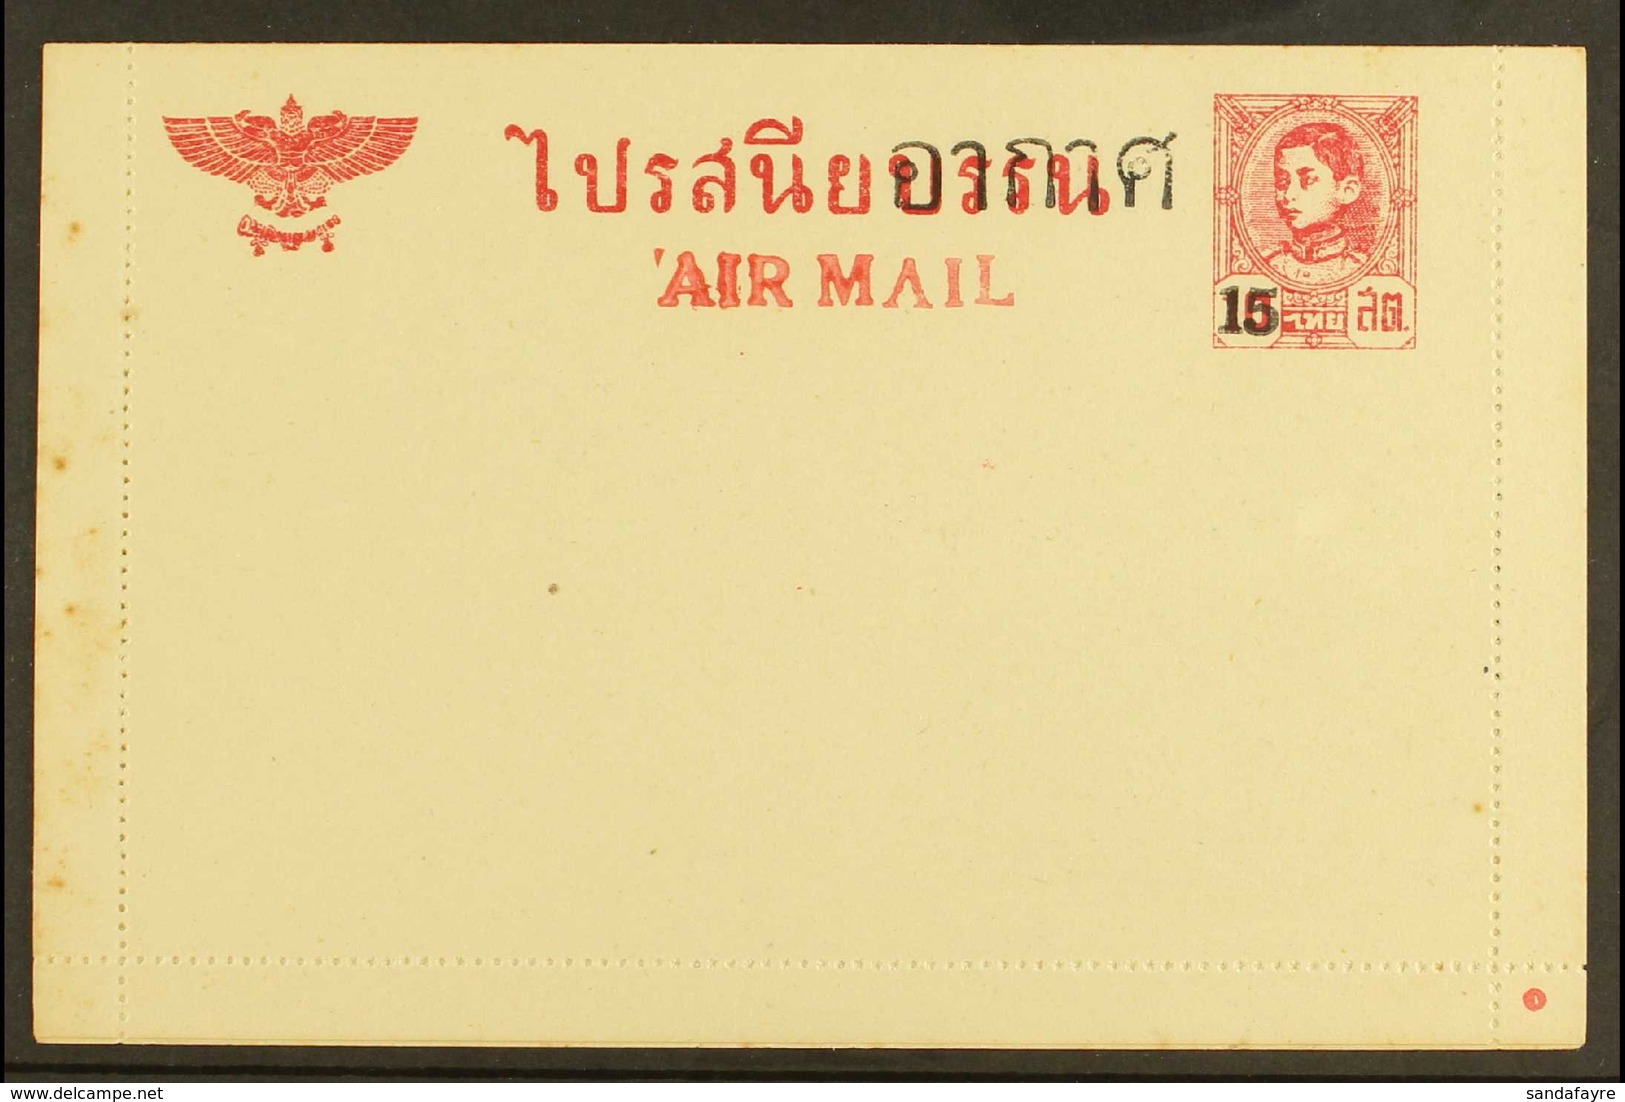 1948 (circa) UNISSUED AIR MAIL LETTER CARD. 1943 10stg Carmine Letter Card With Additional "Air Mail" Inscription & 15st - Thaïlande